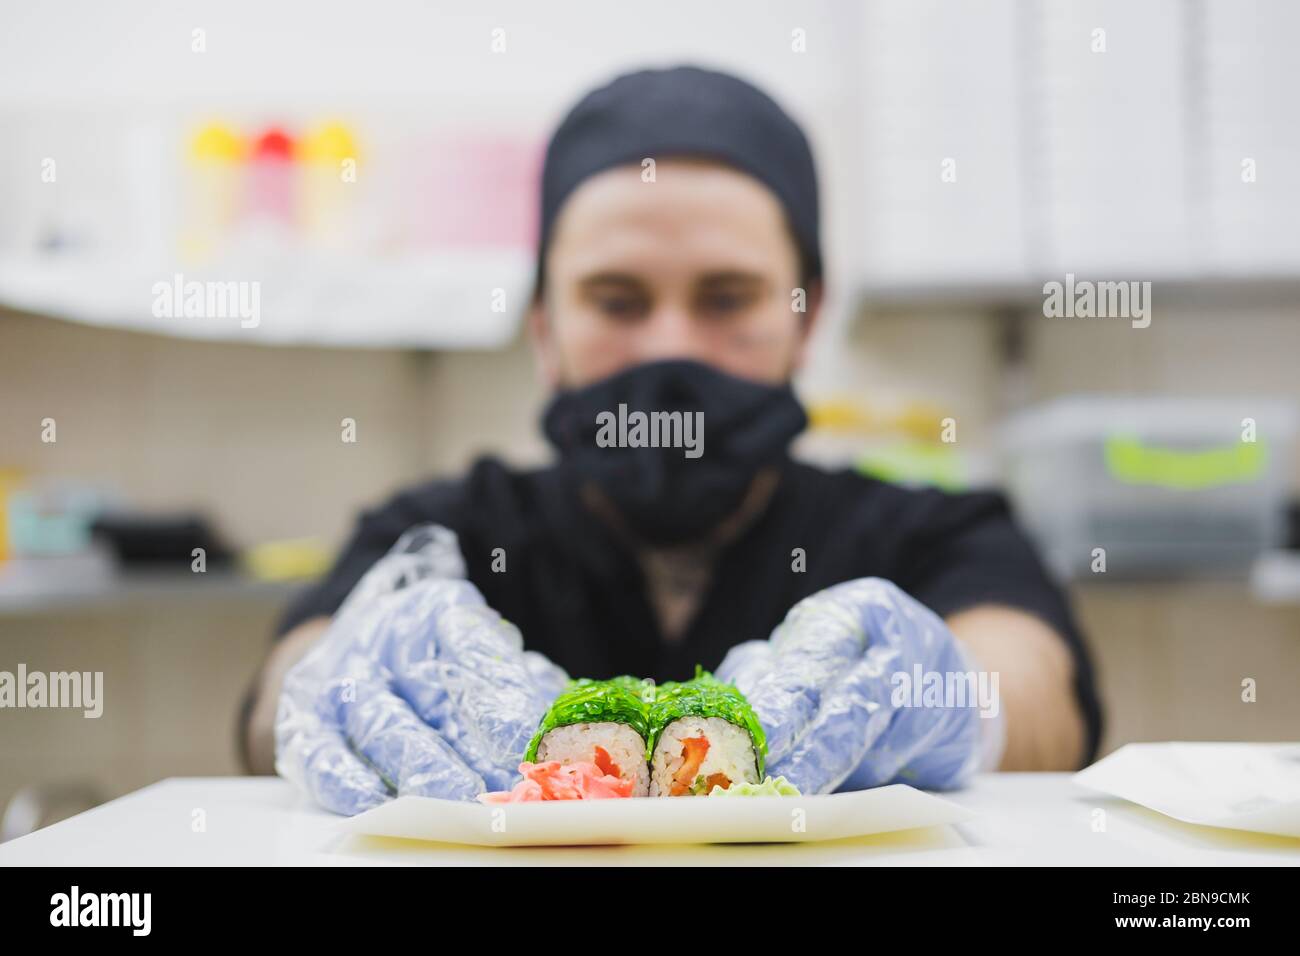 Rollitos de sushi vegano en la cocina comercial para llevar. Comida rápida, comidas con preparación de entrega, ocupación profesional e imagen de negocio Foto de stock